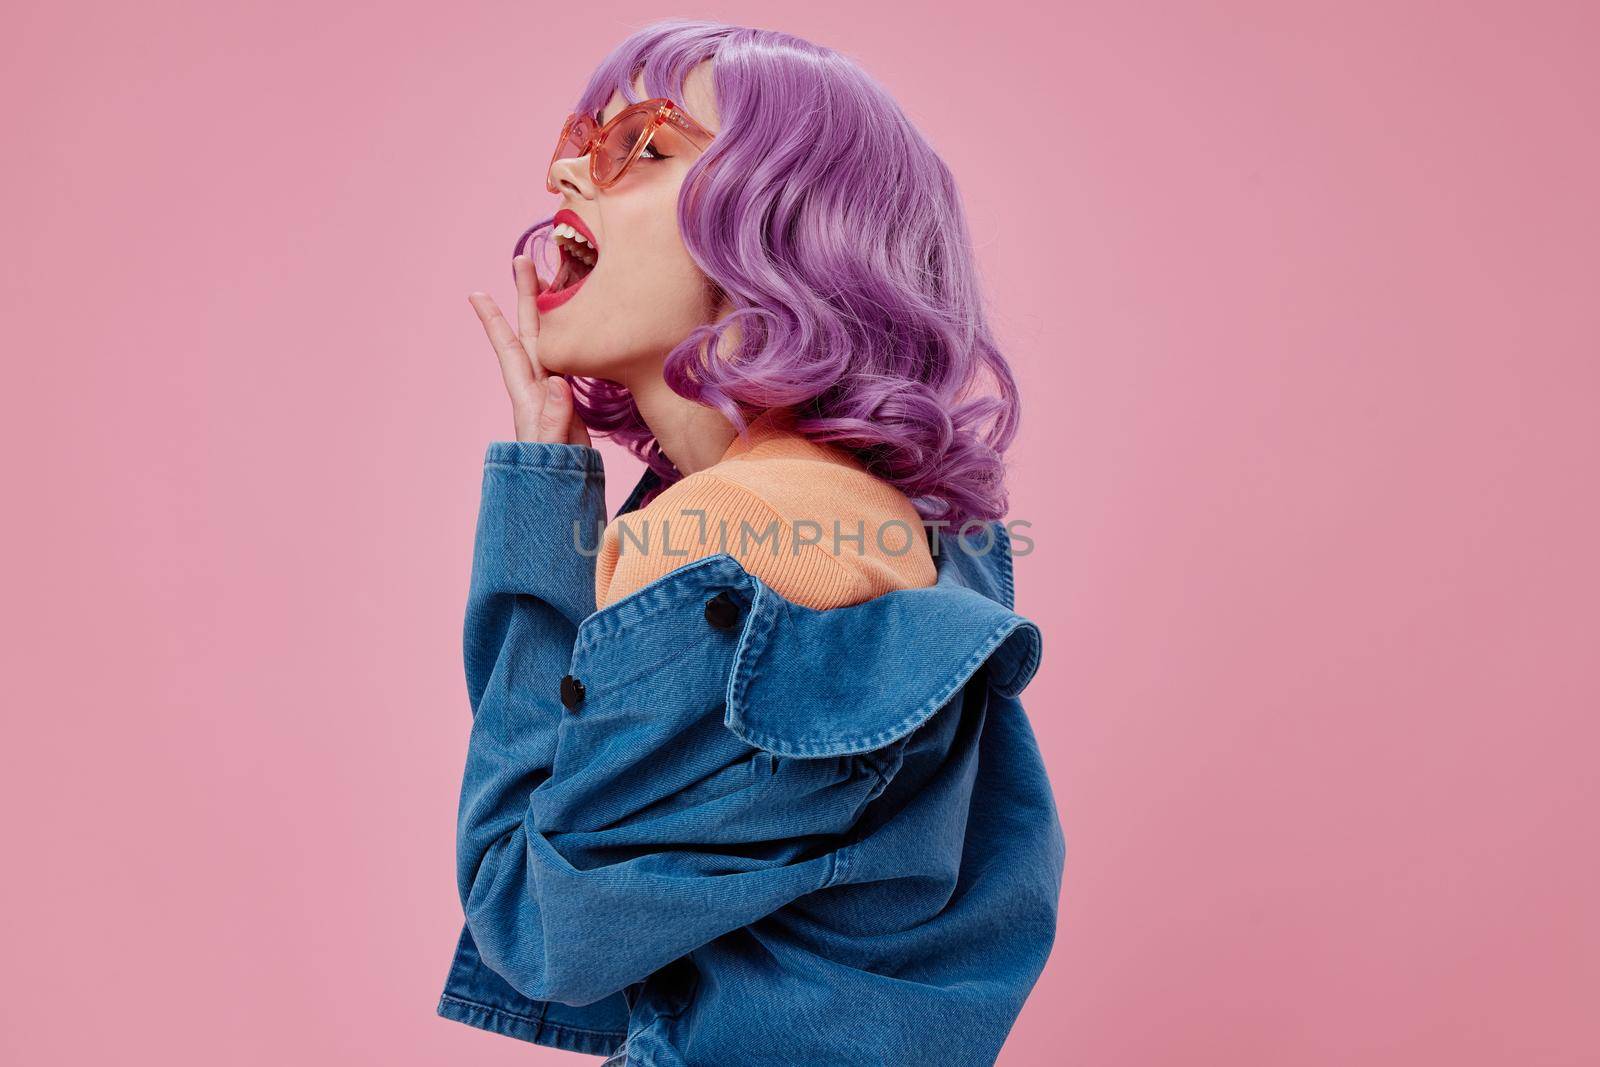 Beauty Fashion woman purple hair fashion glasses denim clothing pink background unaltered. High quality photo